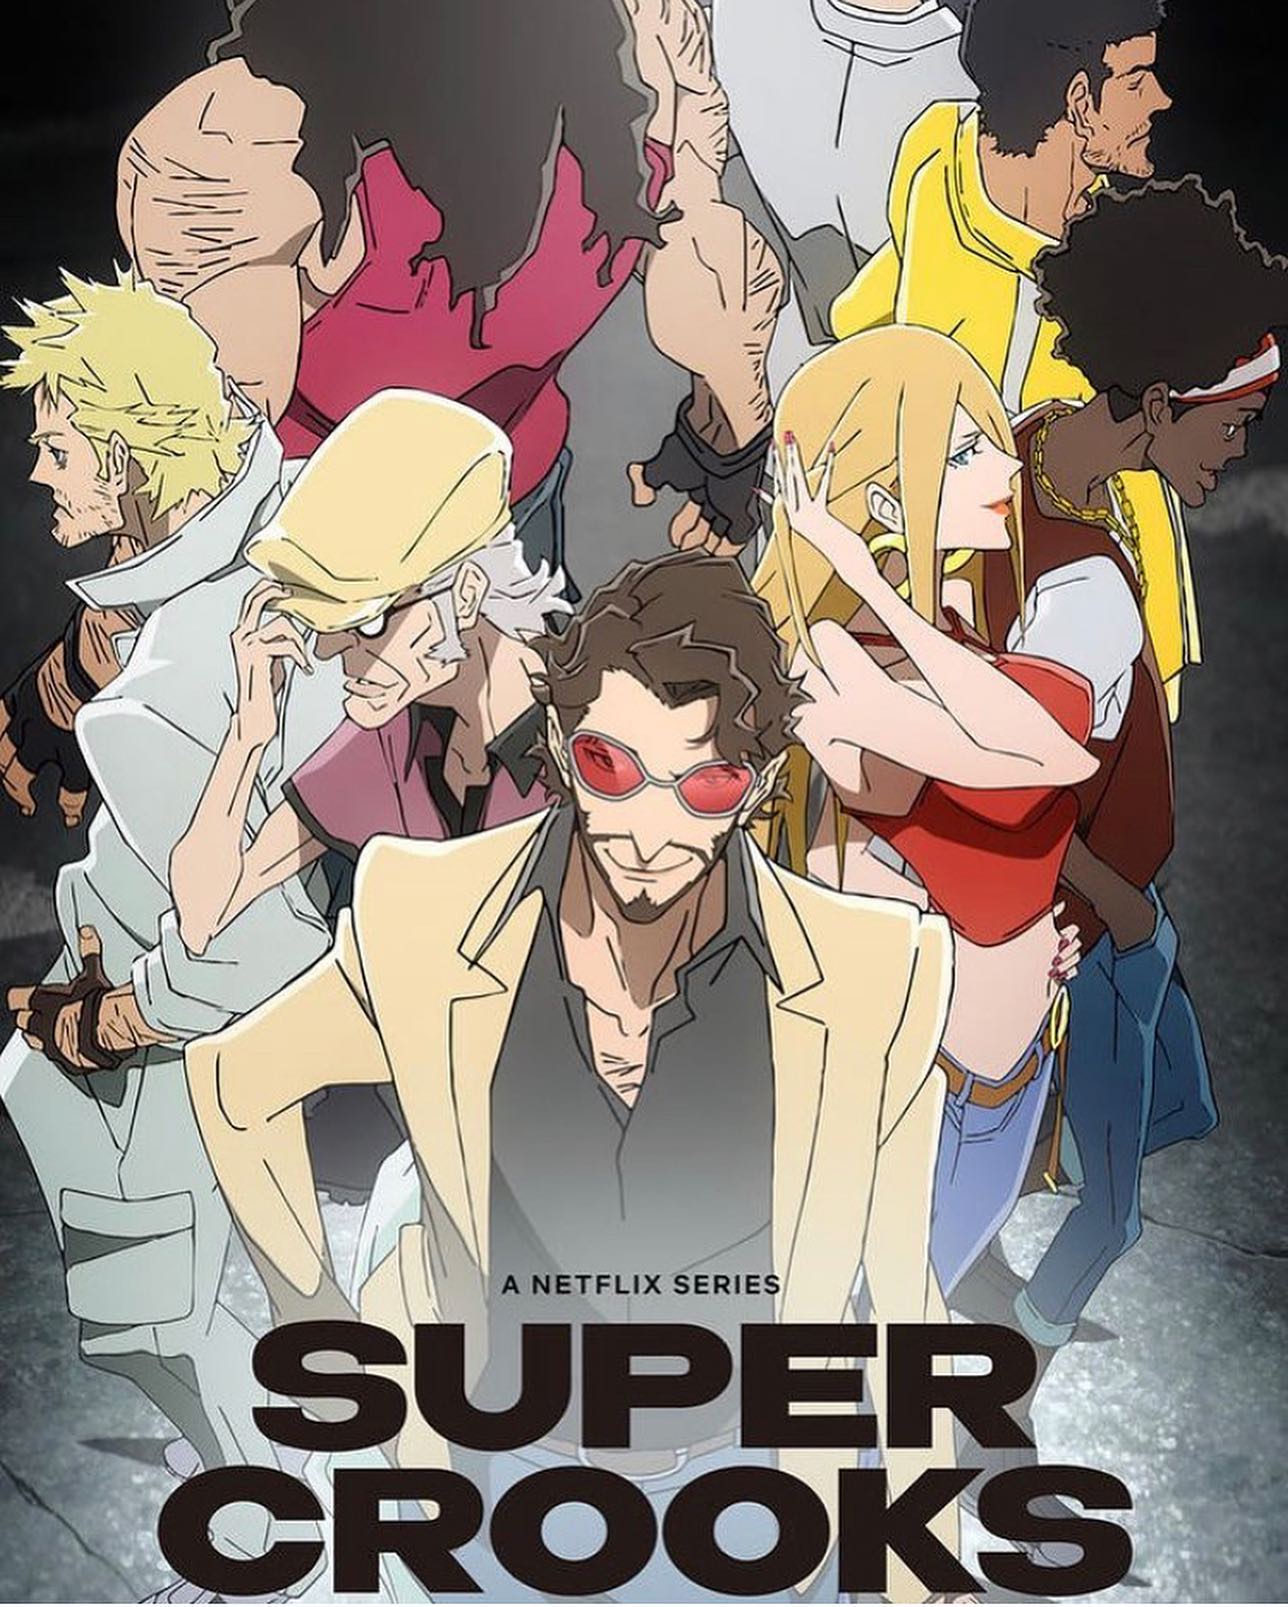 Netflix’s Super Crooks Promotional Poster